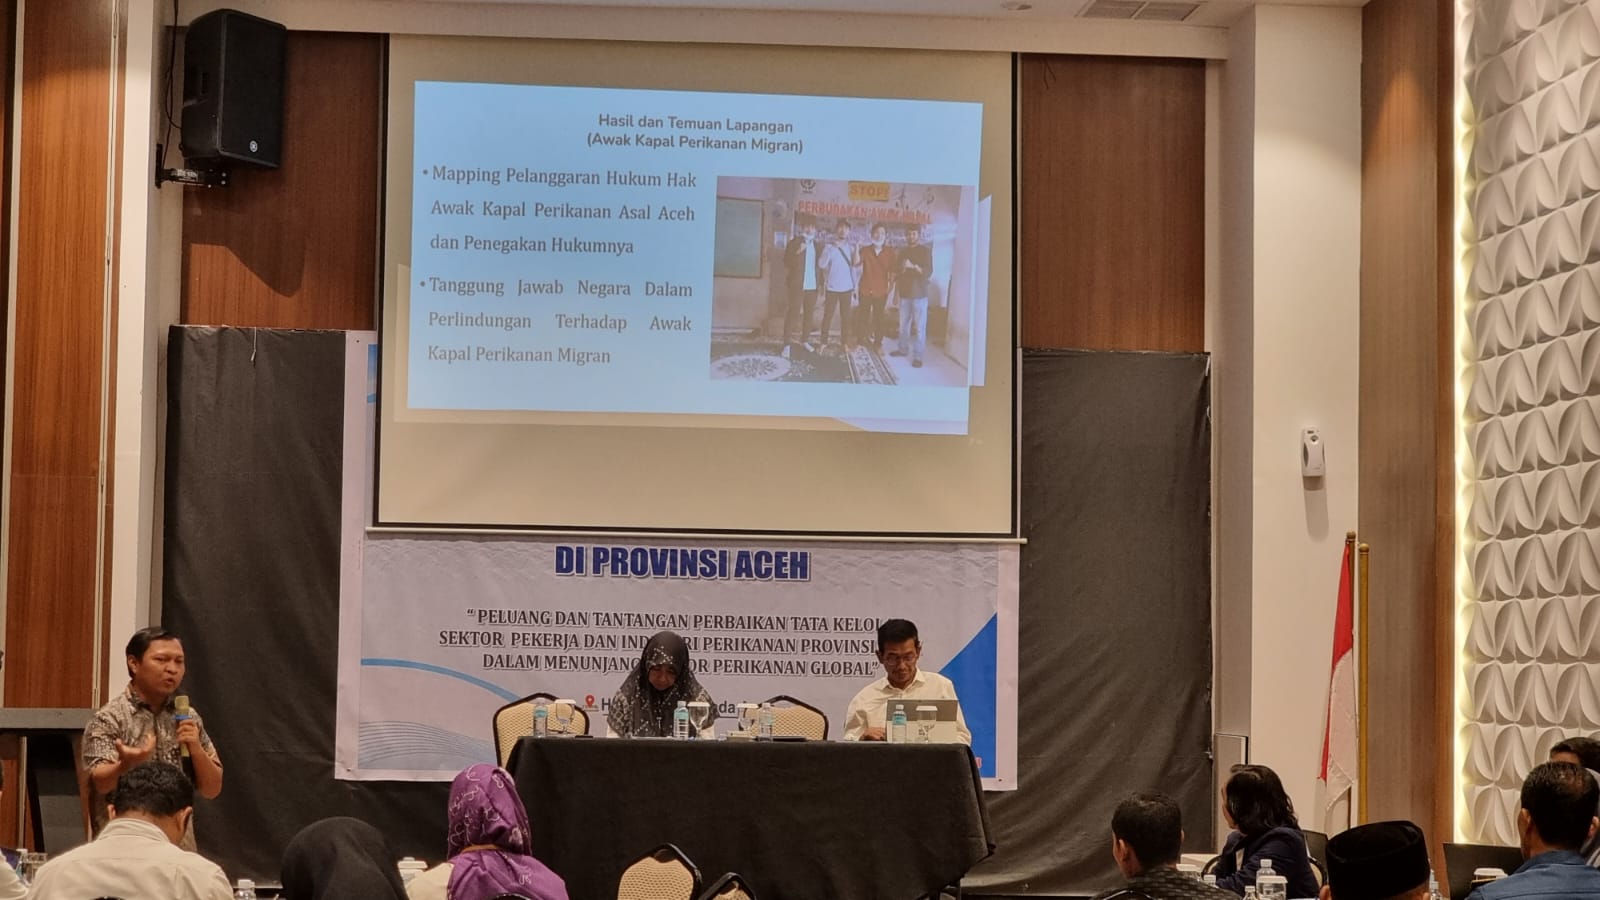 SEI Bersama Sekretariat Team 9 Dorong Perbaikan Tata Kelola Perikanan dan Perlindungan Pekerja di Aceh